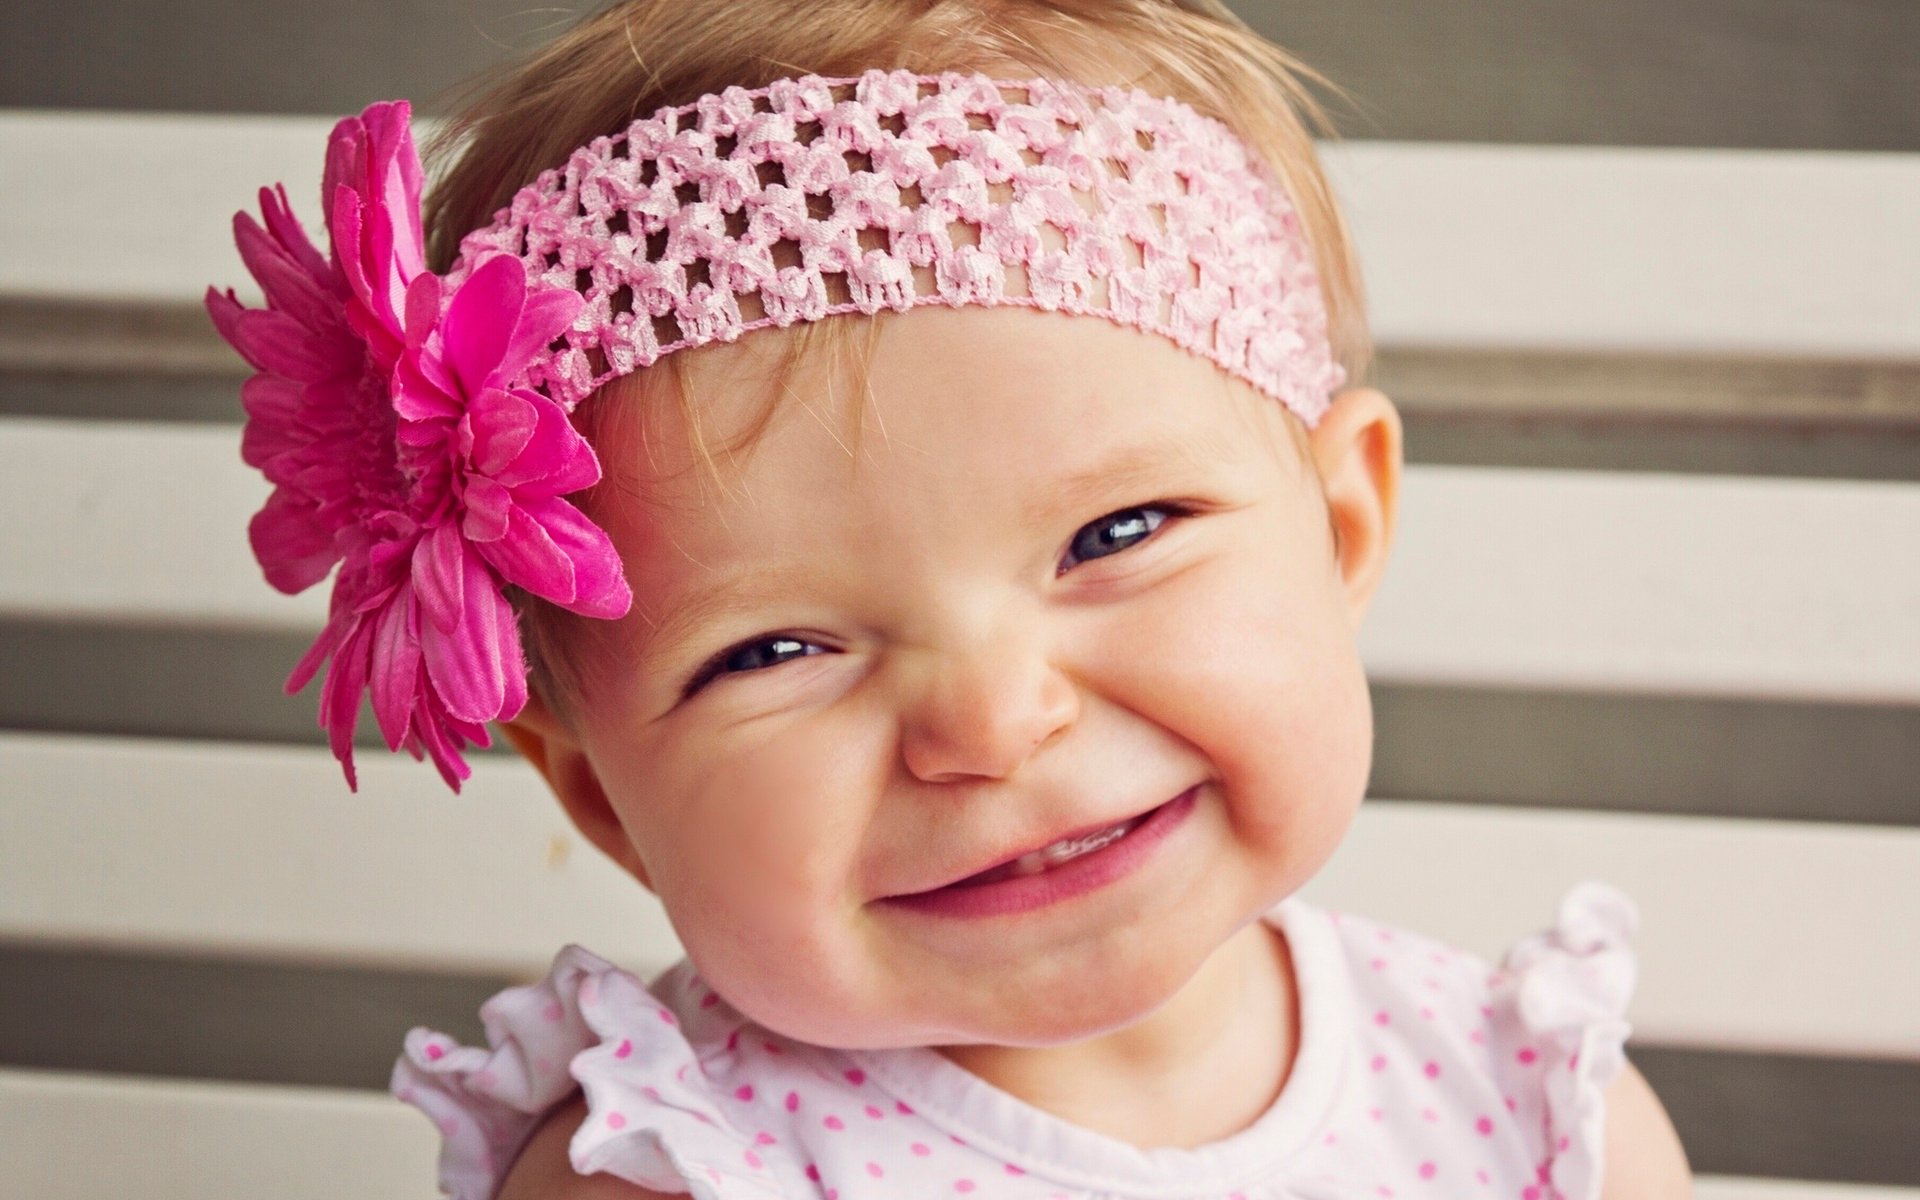 Cute Baby Girl Pictures Wallpapers - WallpaperSafari